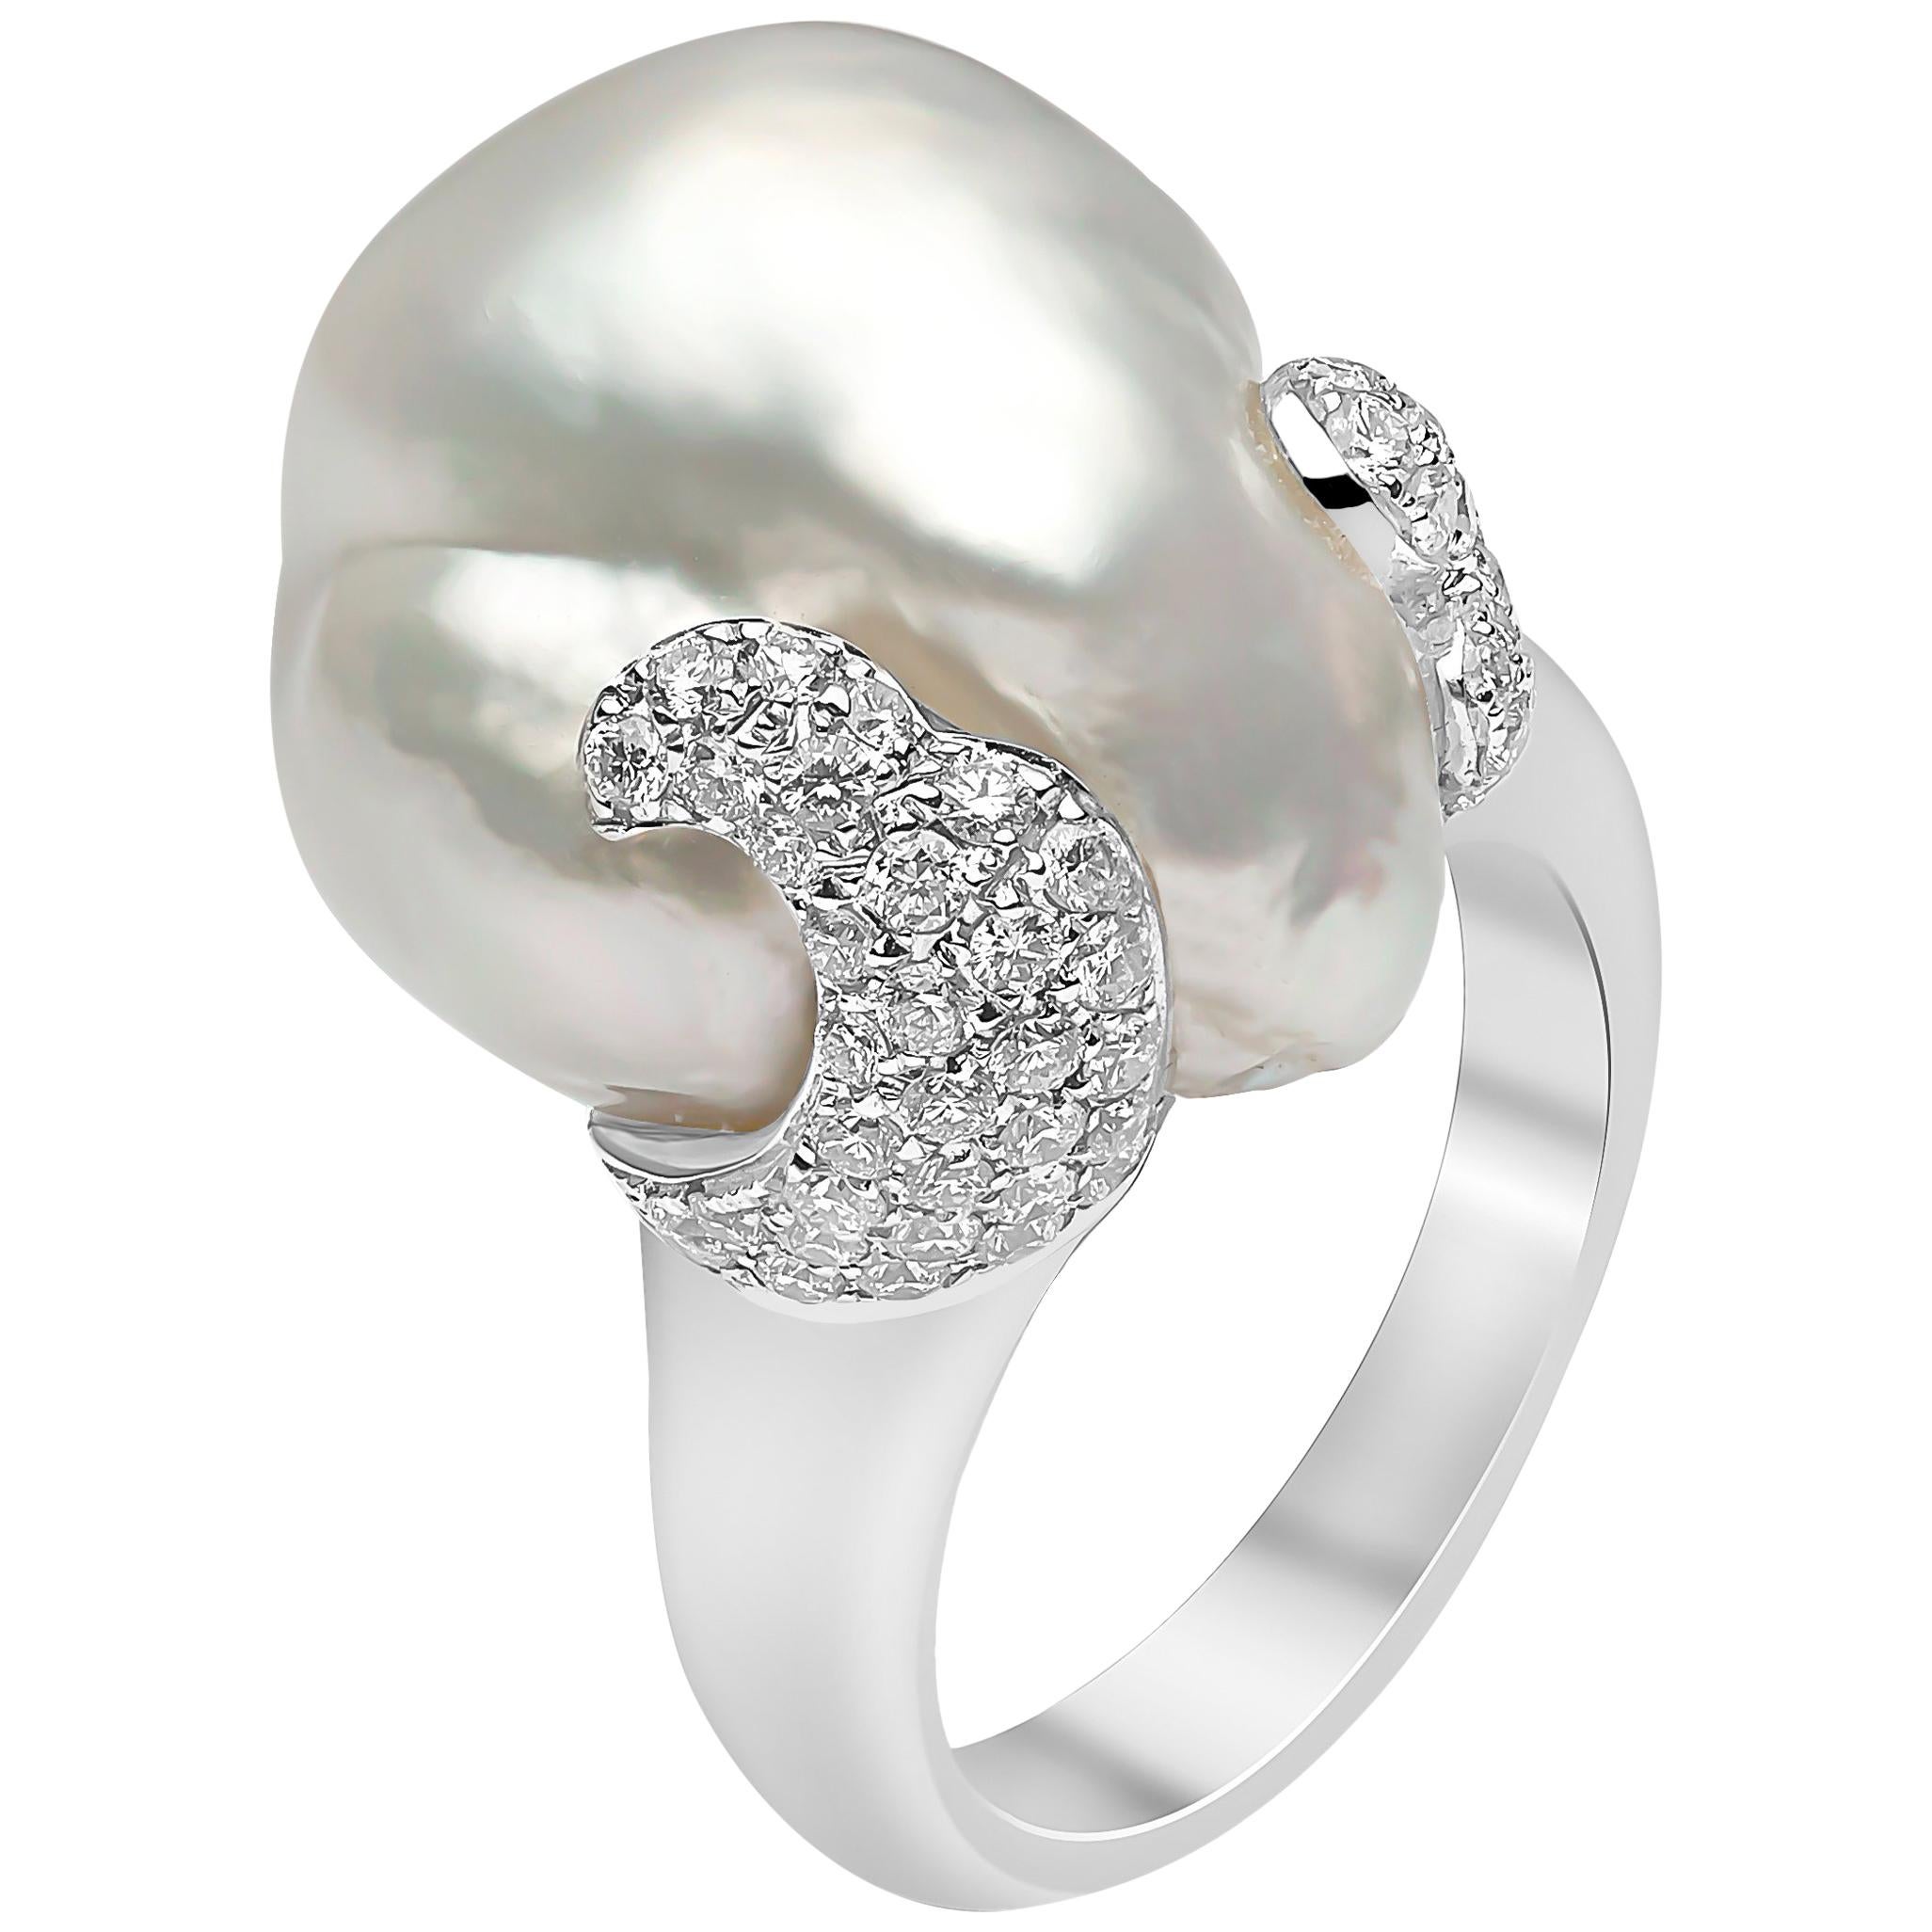 Yoko London South Sea Baroque Pearl and Diamond Ring Set in 18 Karat White Gold